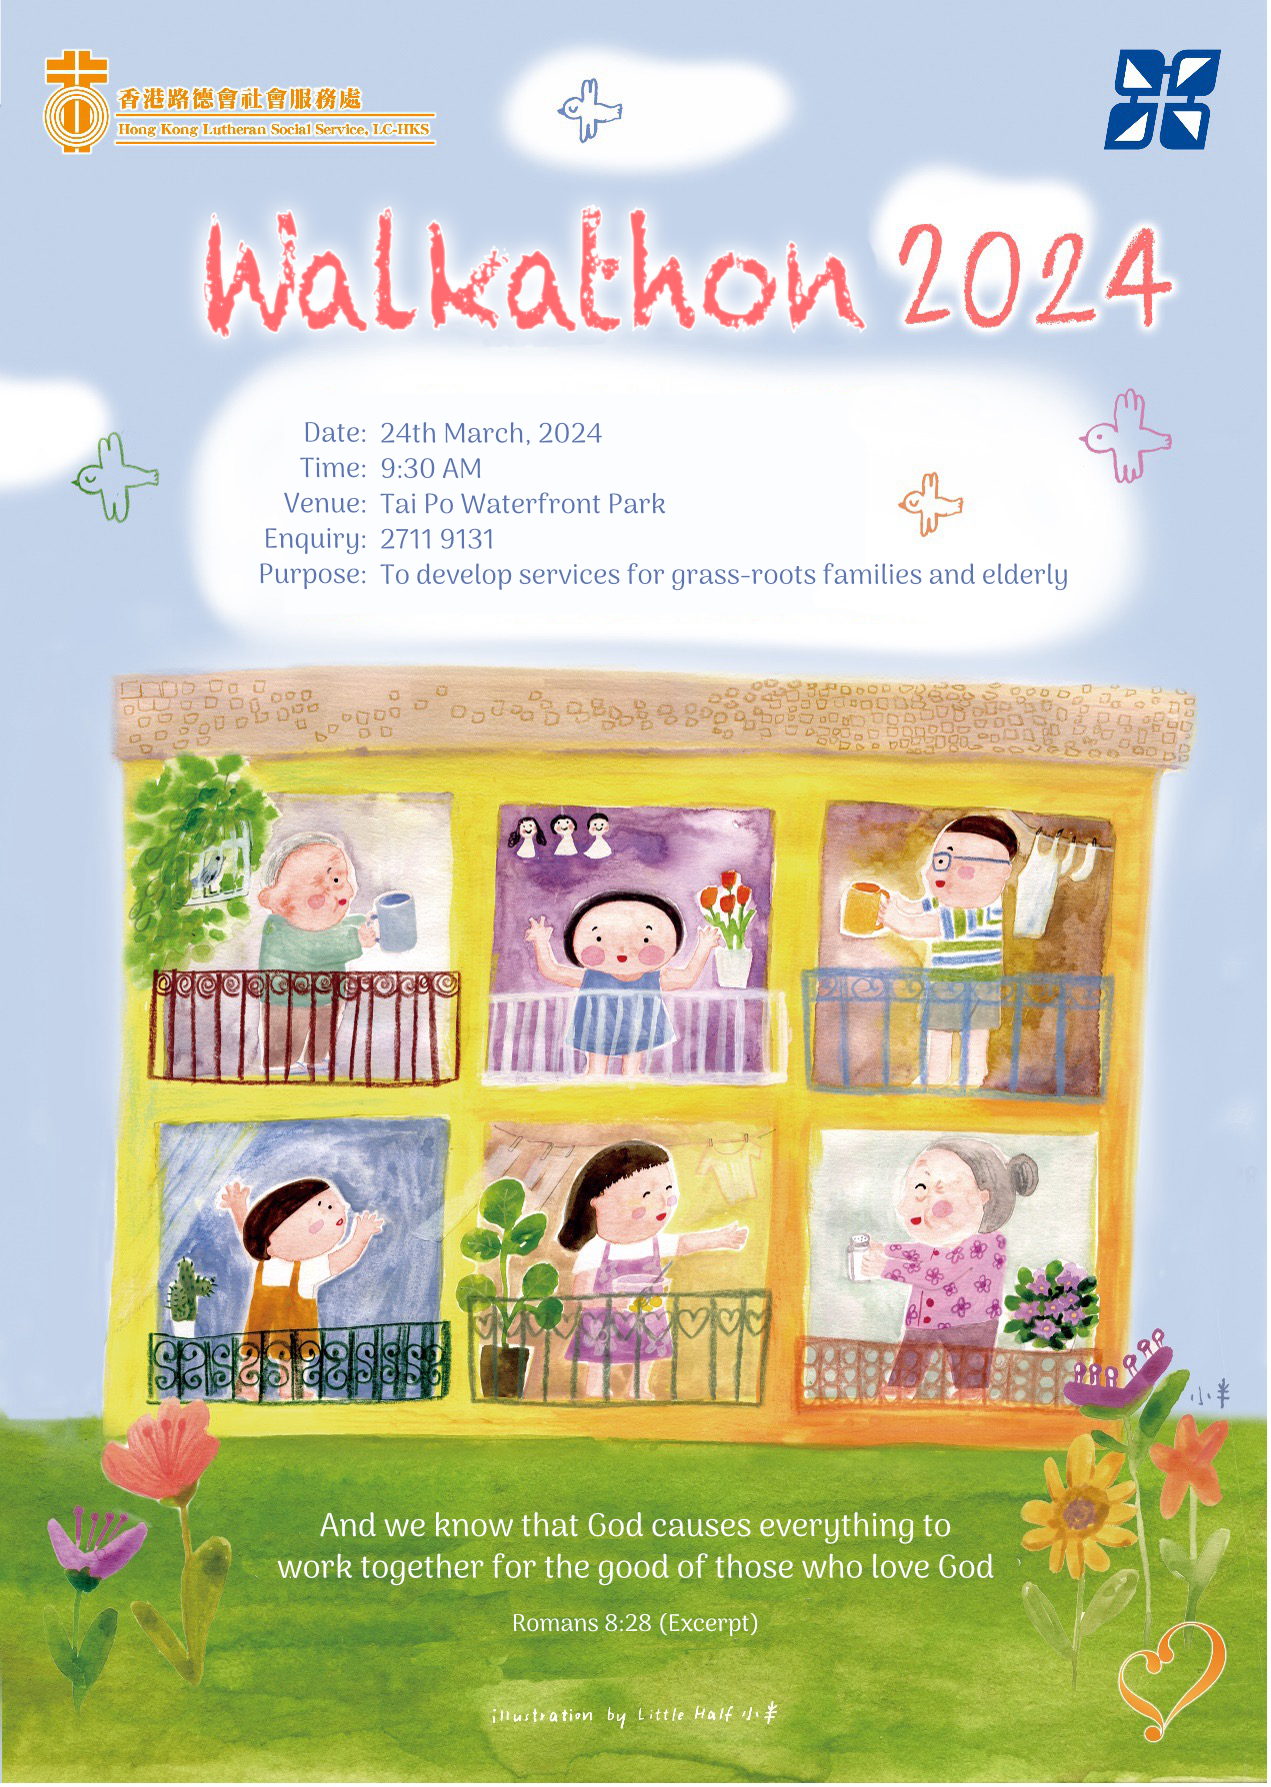 Walkathon 2024